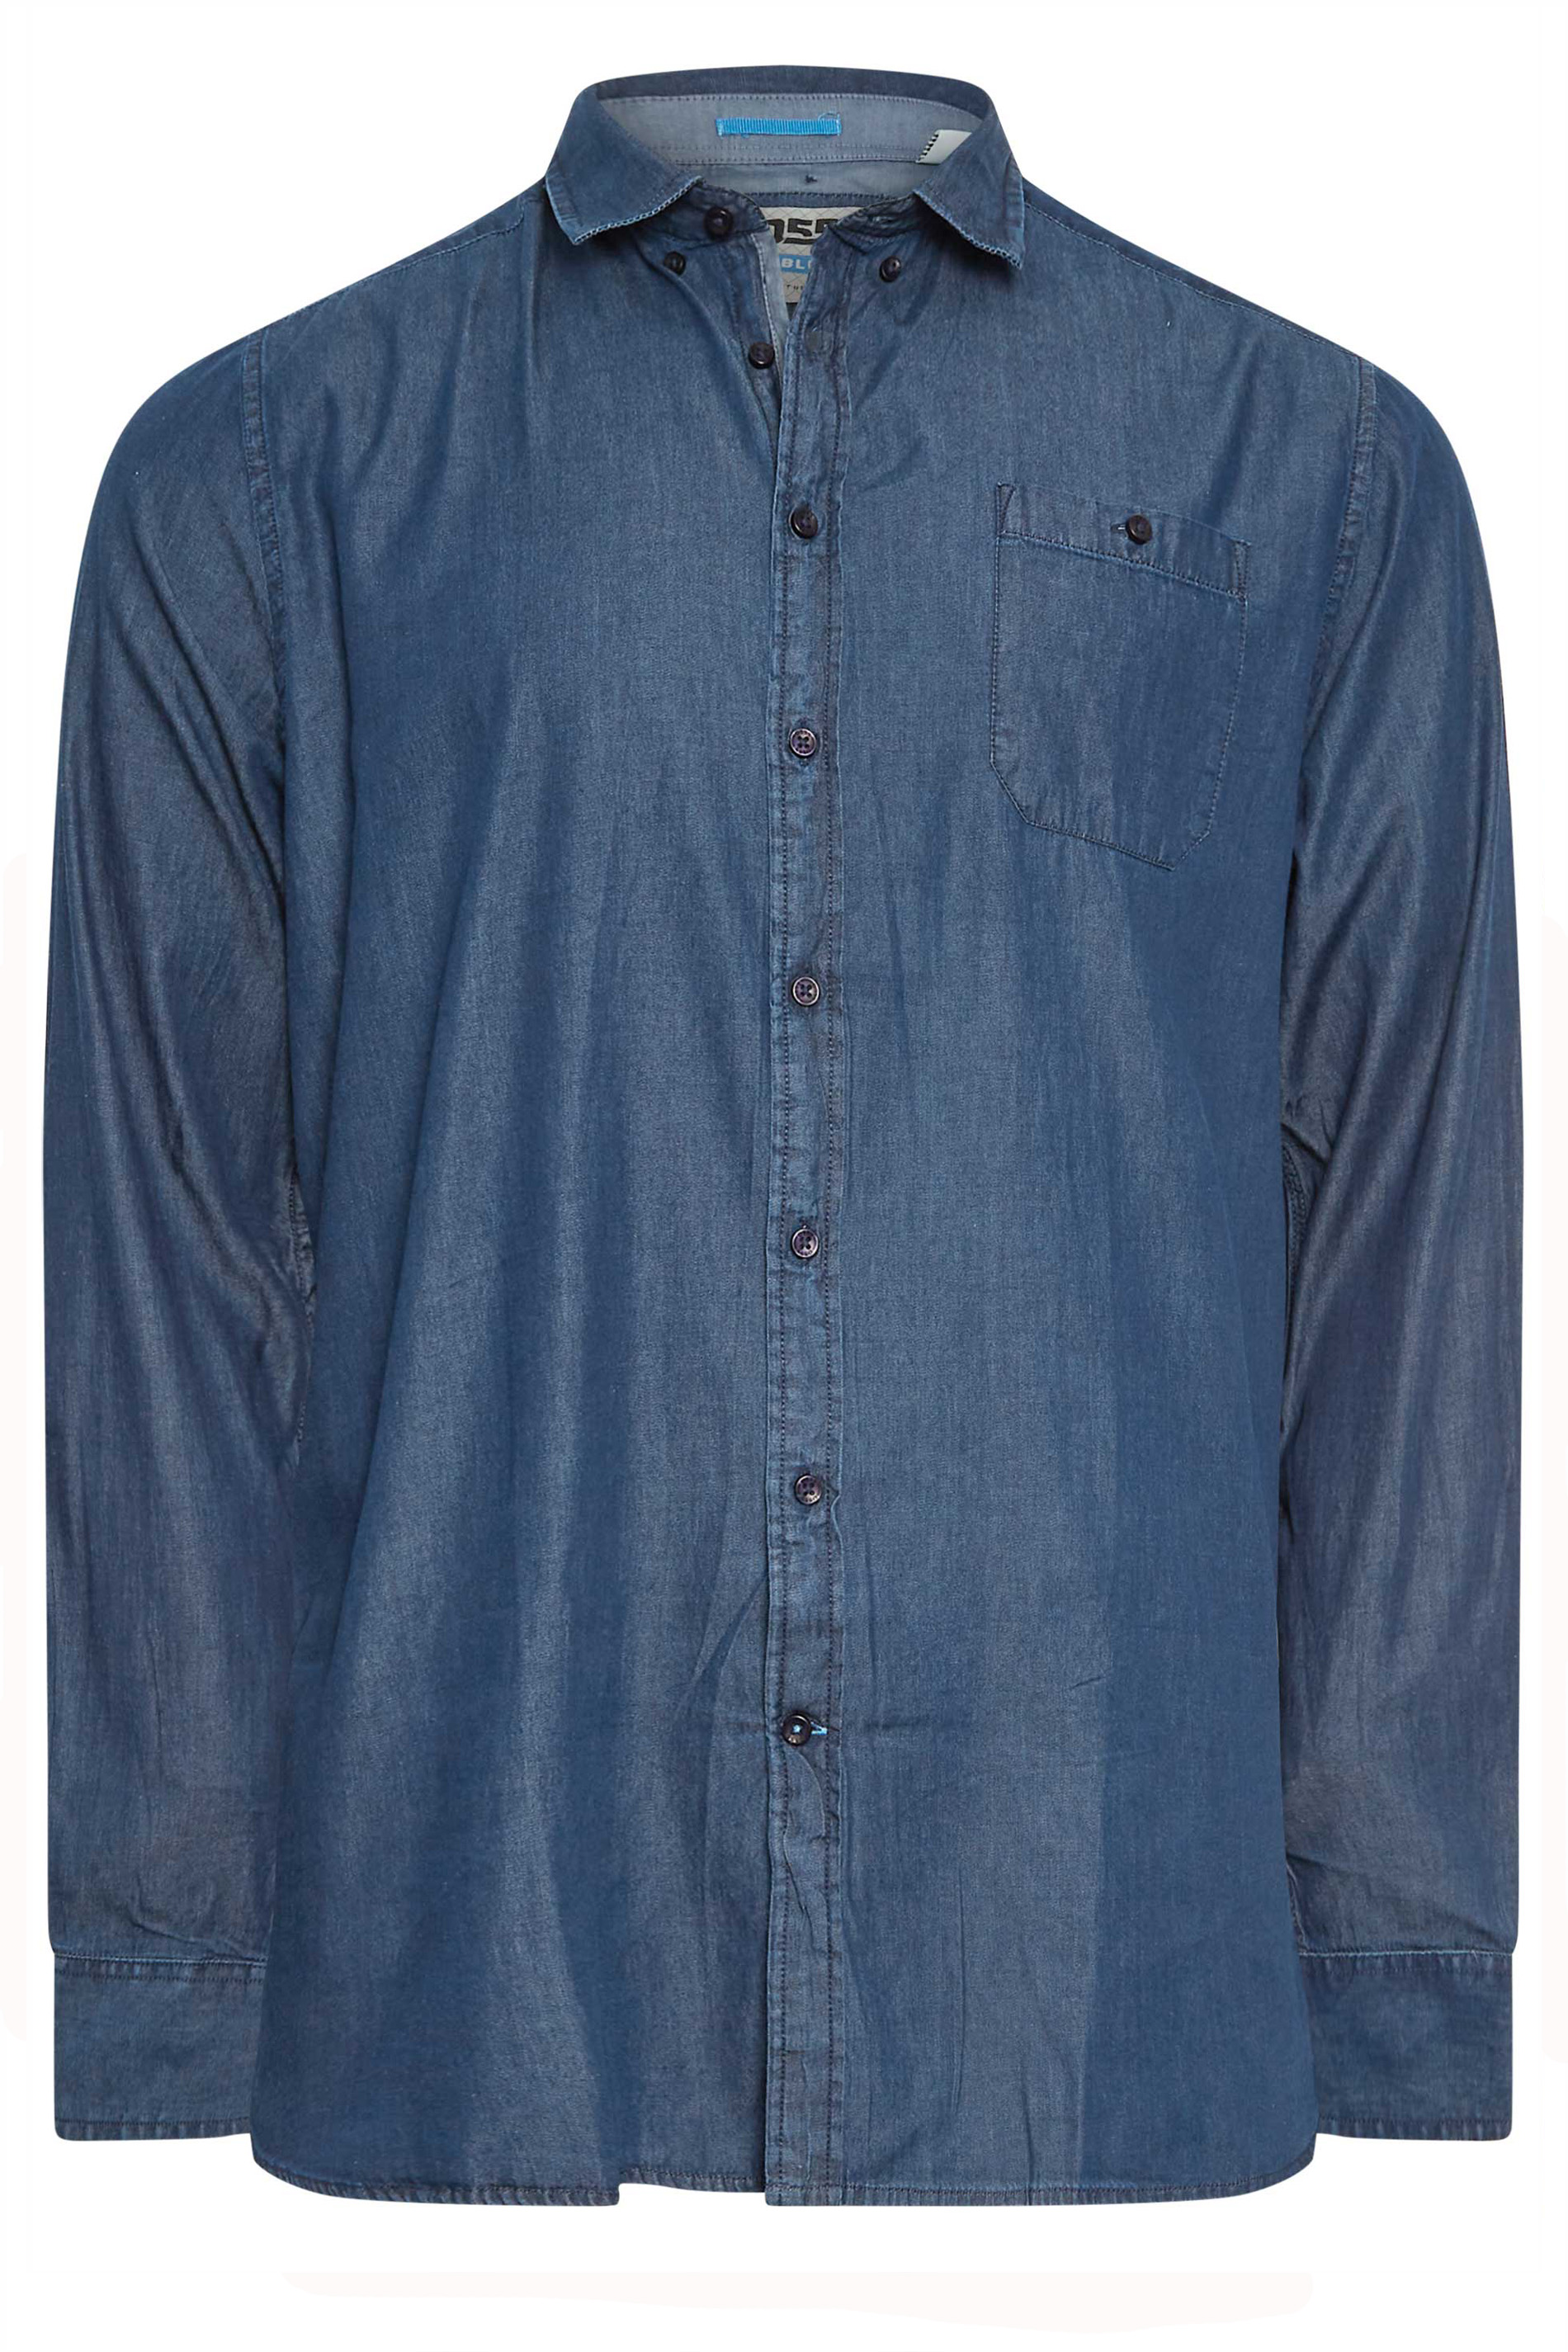 D555 Big & Tall Navy Blue Denim Shirt | BadRhino  1